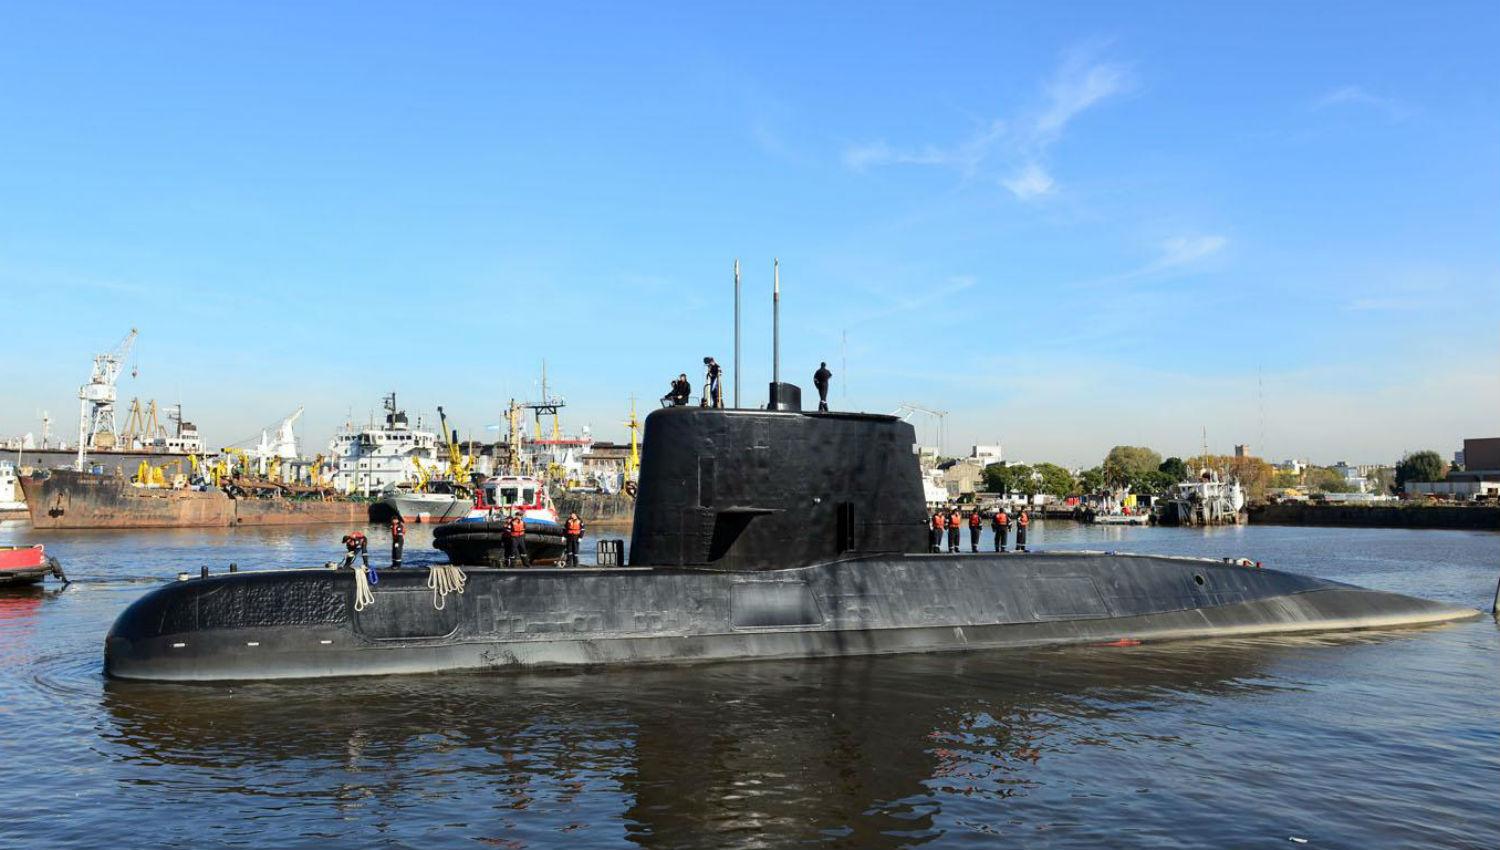 Submarino ARA San Juan.

